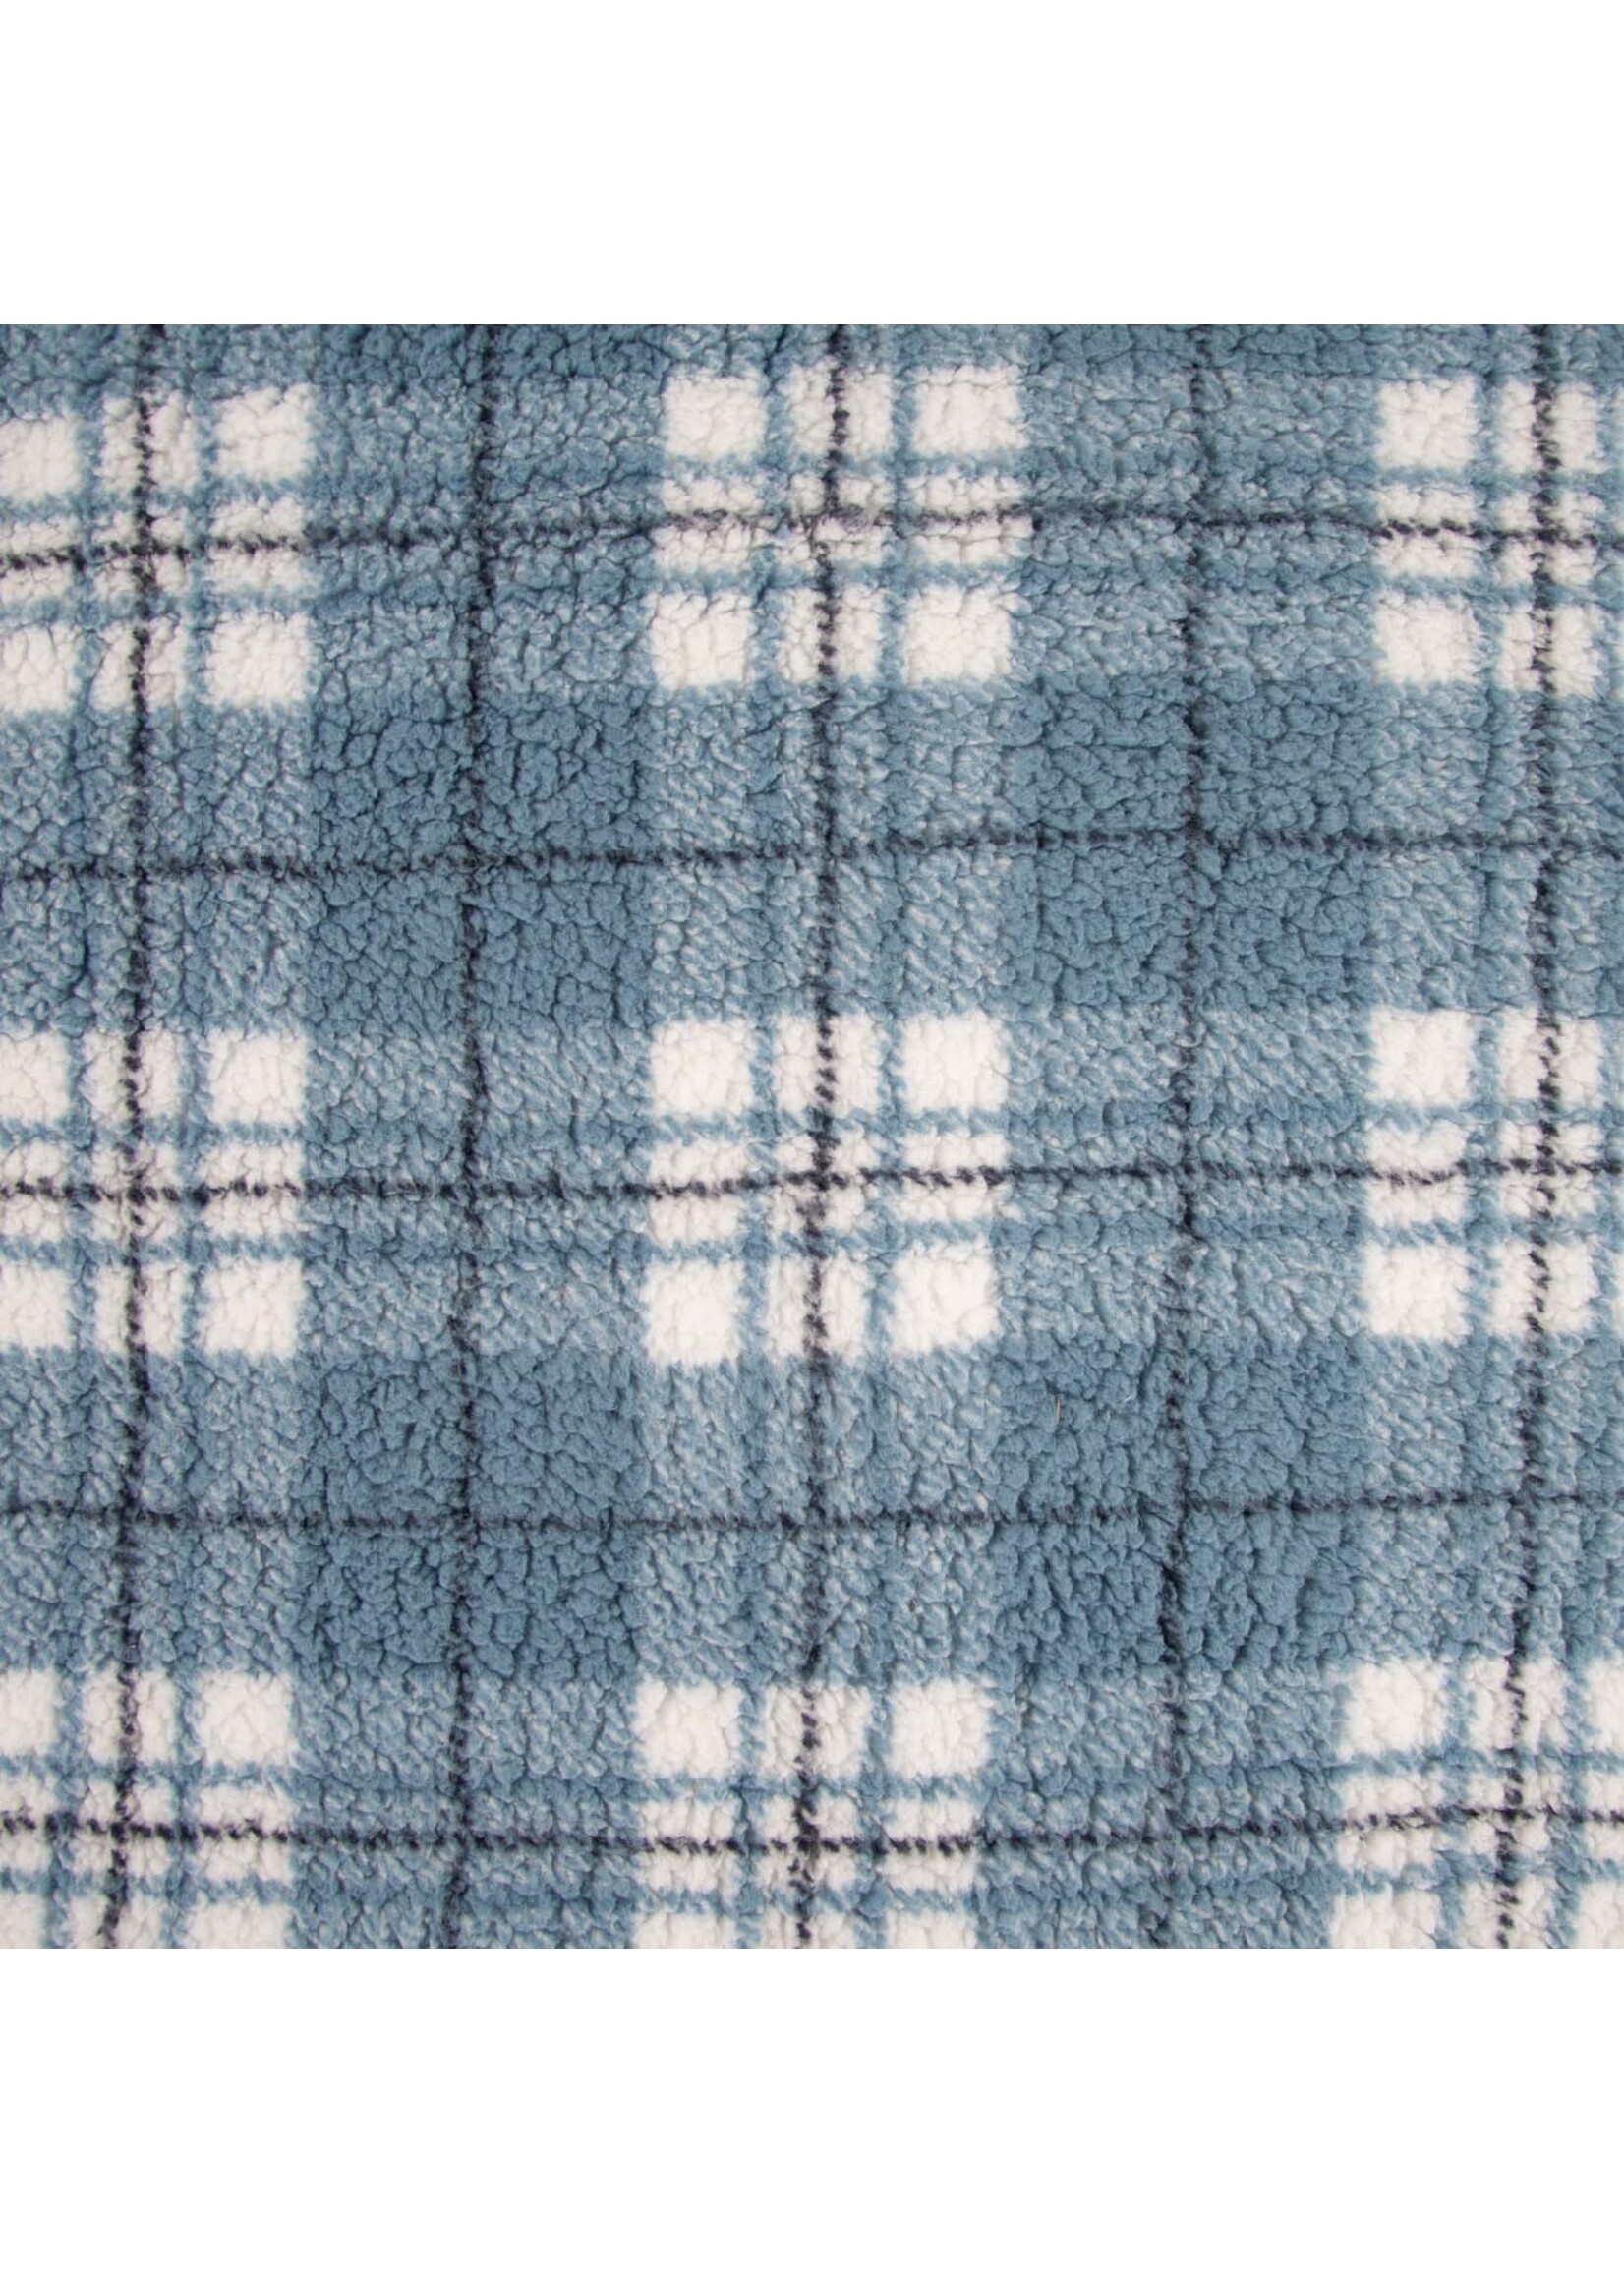 Katia Fabrics Sherpa Plaid Fleece Stof - Blauw print